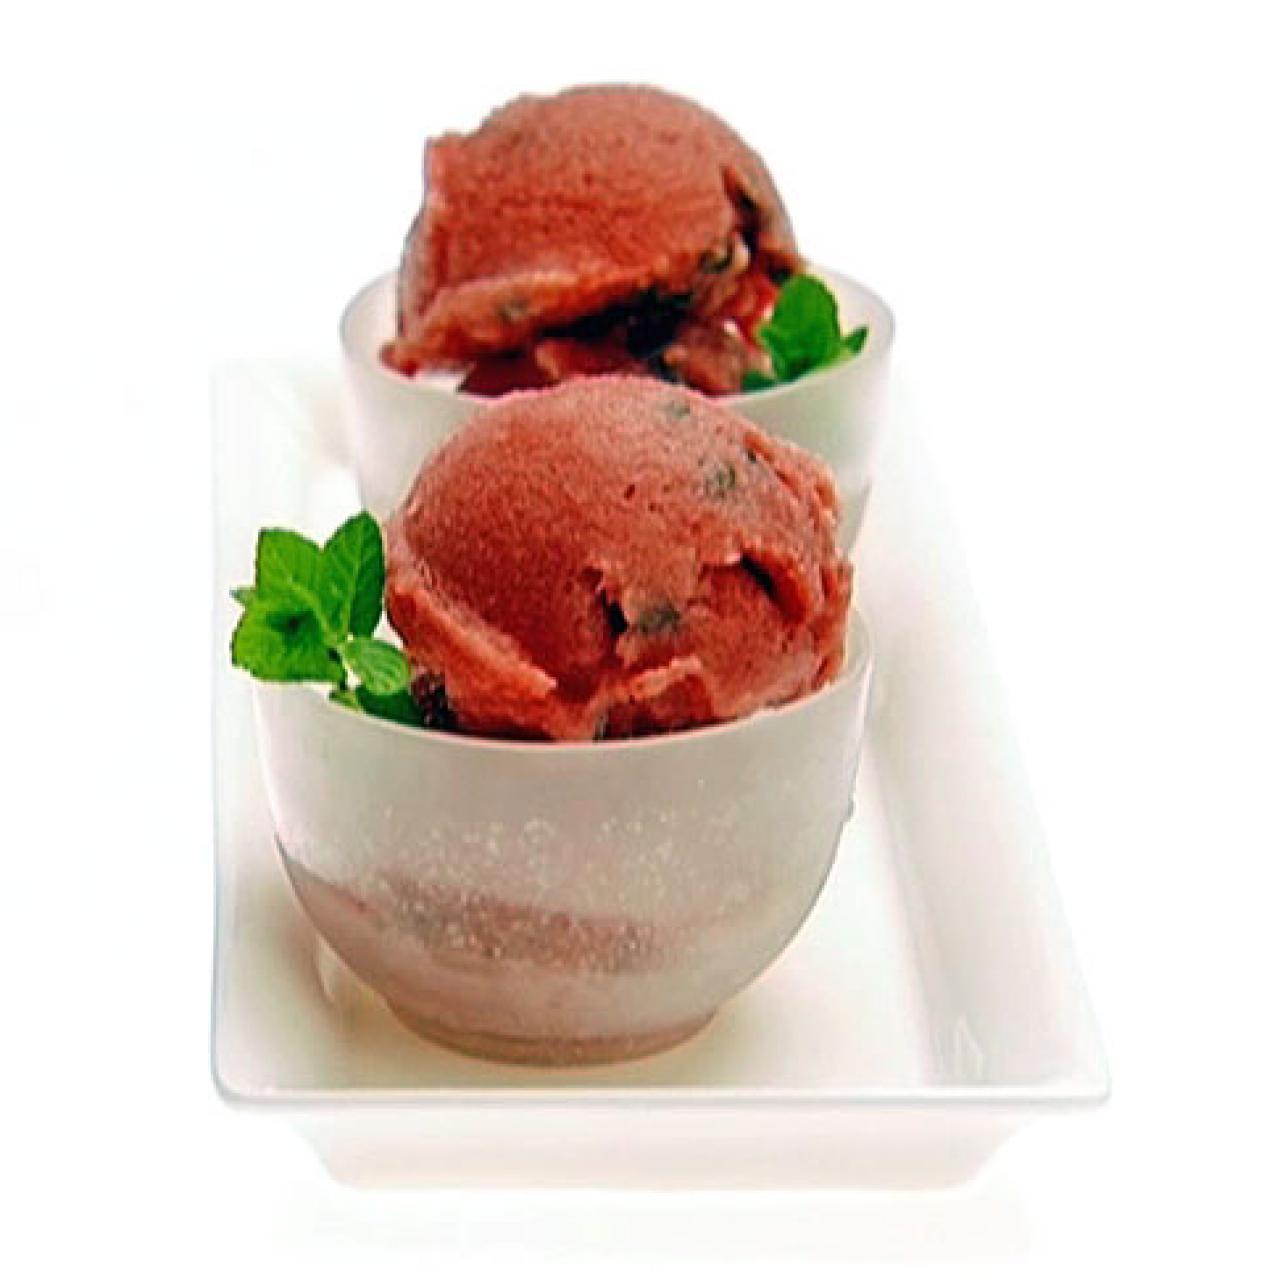 Raspberry-margarita sorbet recipe - Chatelaine